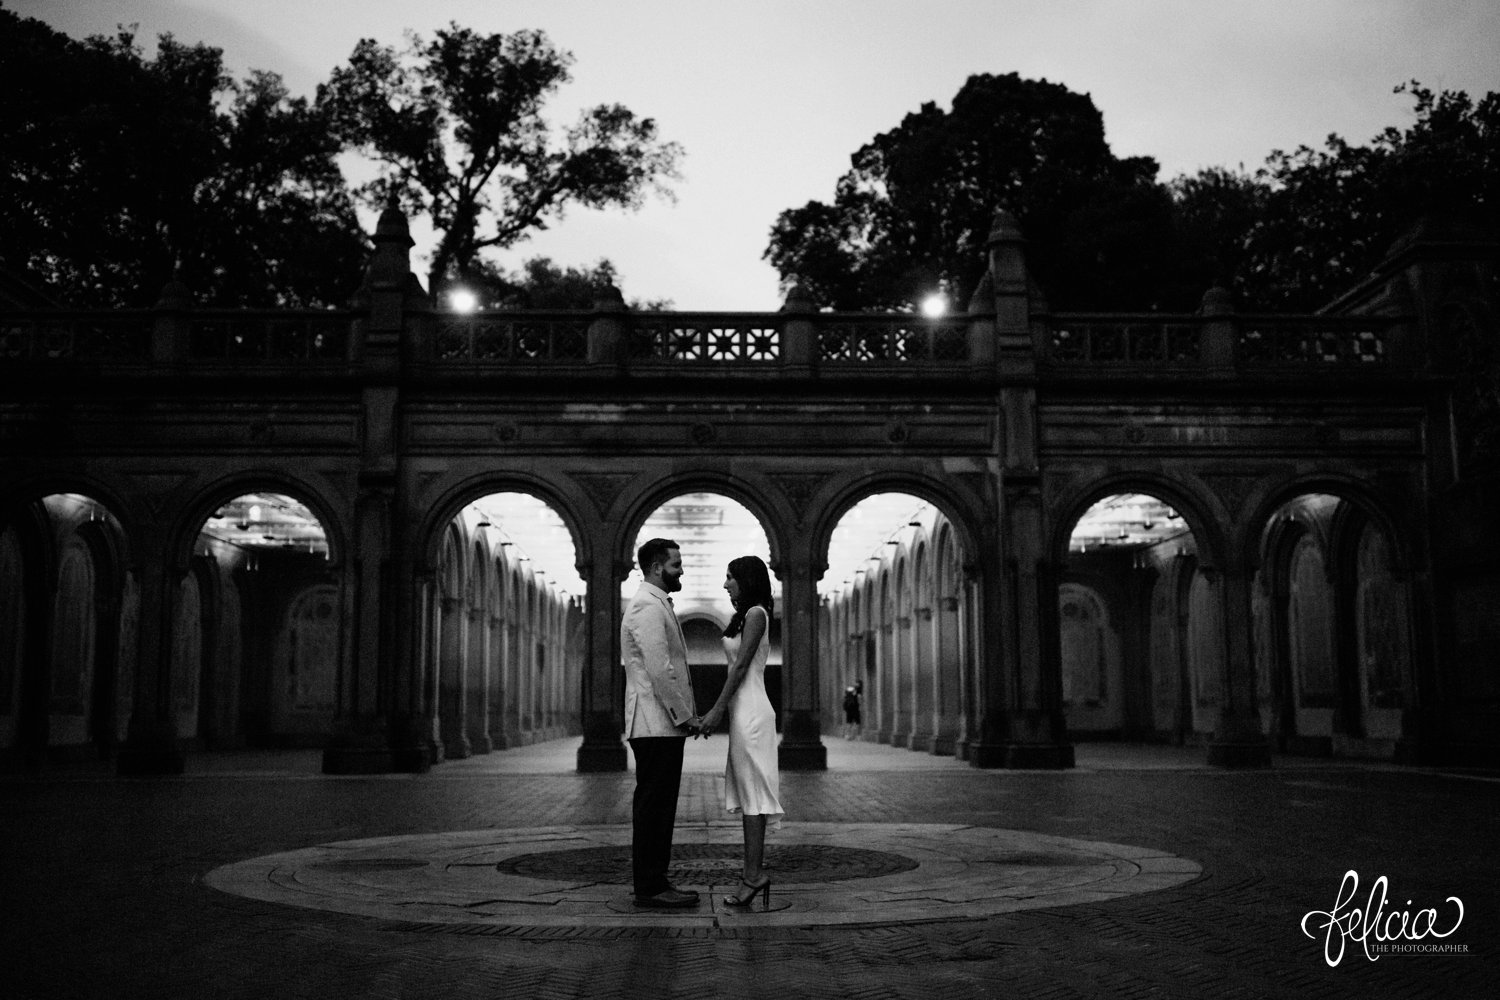 images by feliciathephotographer.com | destination wedding photographer | elopement | new york city | second look | bethesda | central park | symmetry | black and white | contrast | details | 